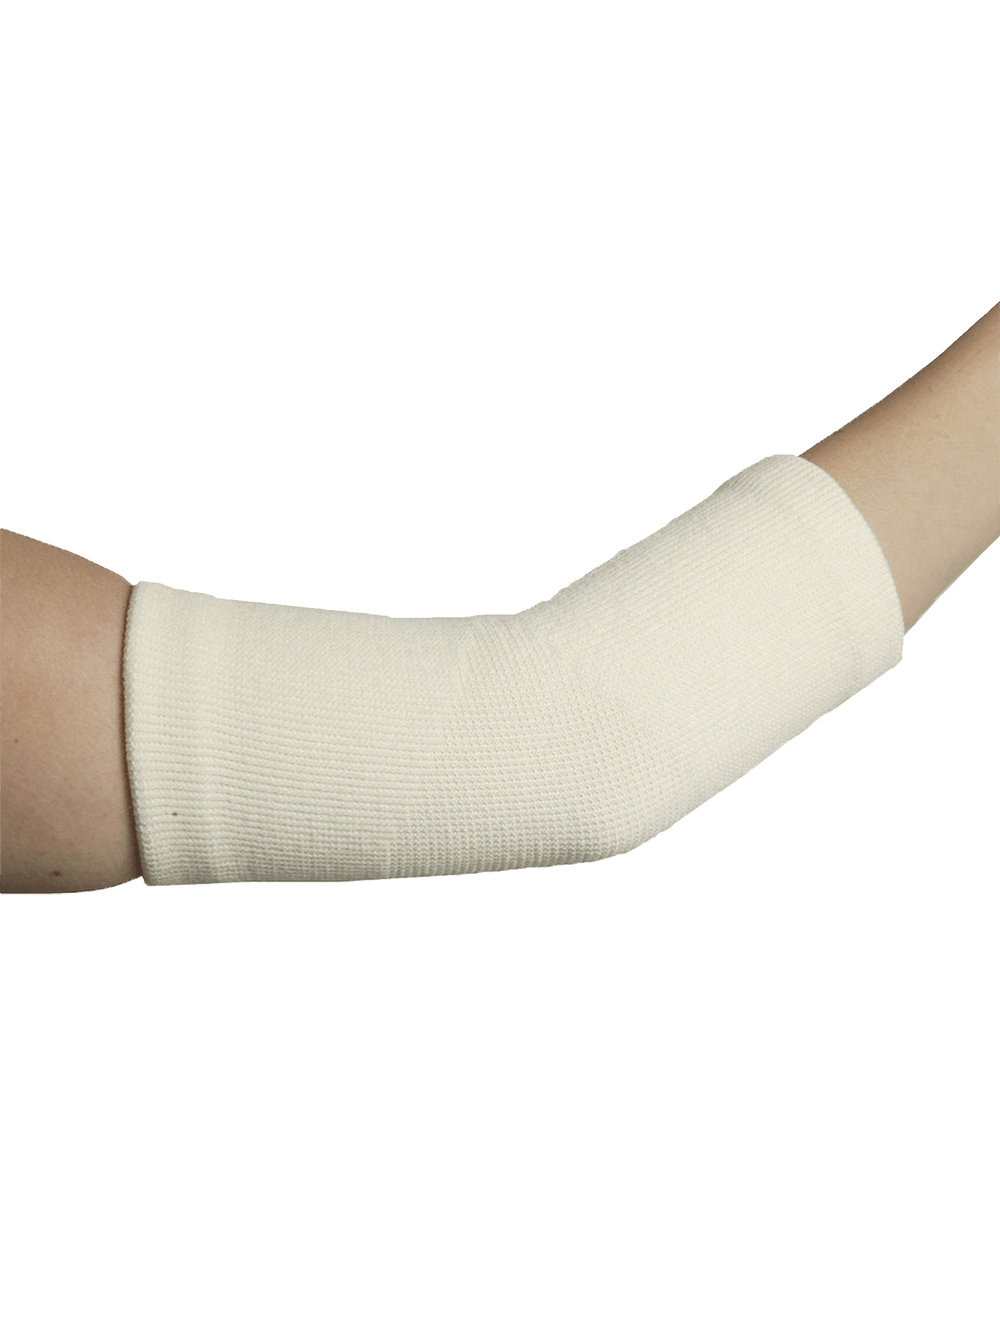 MAXAR Wool/Elastic Elbow Brace - Two-Way Stretch: White